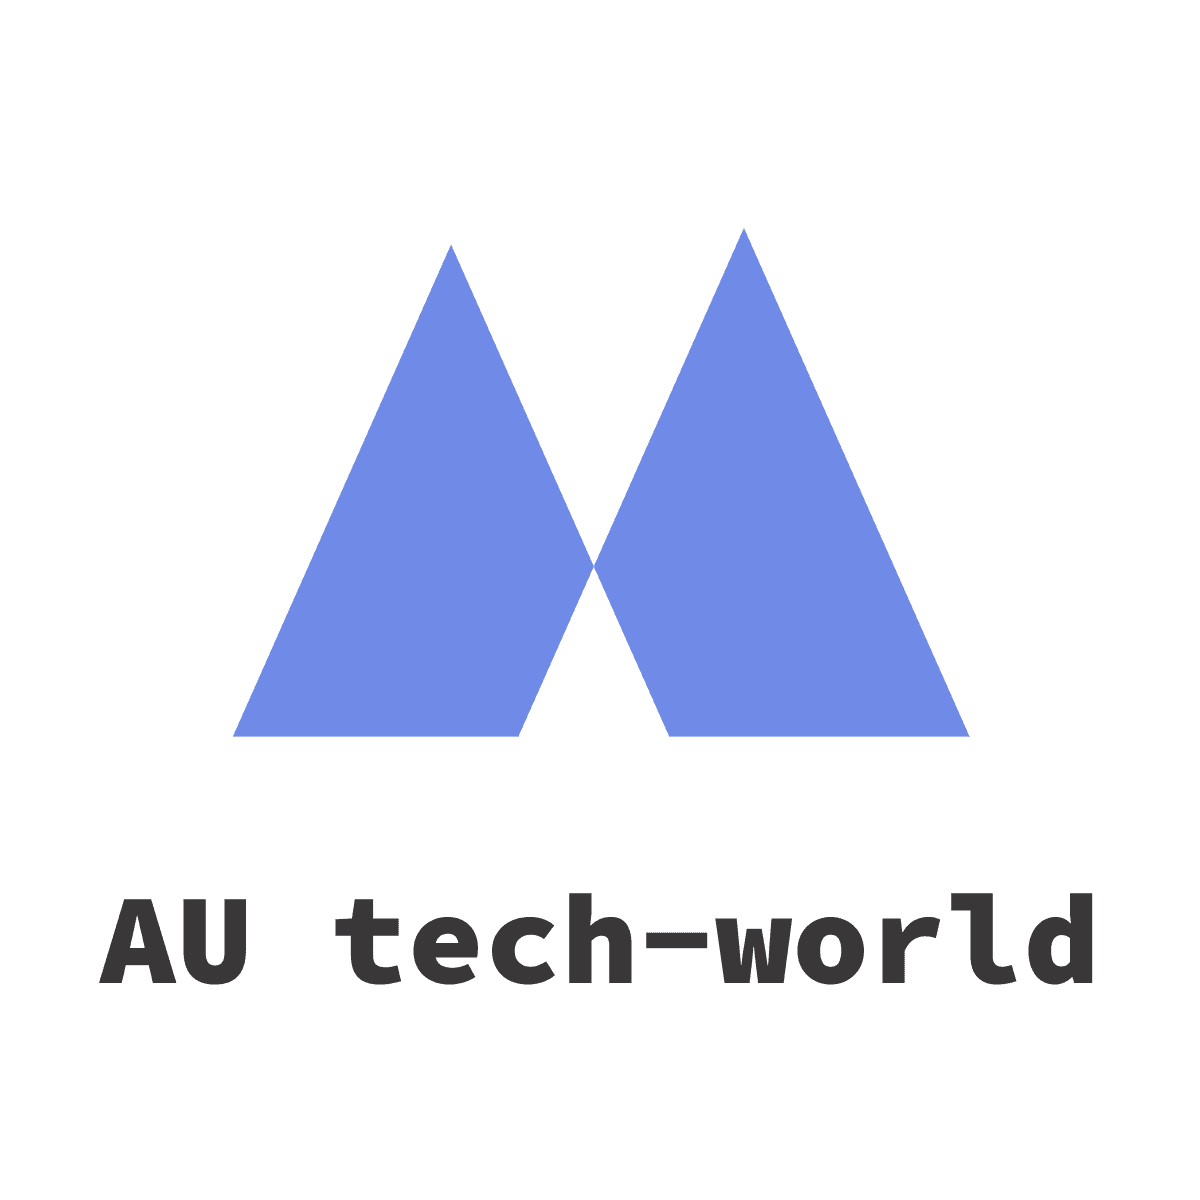 AU tech-world